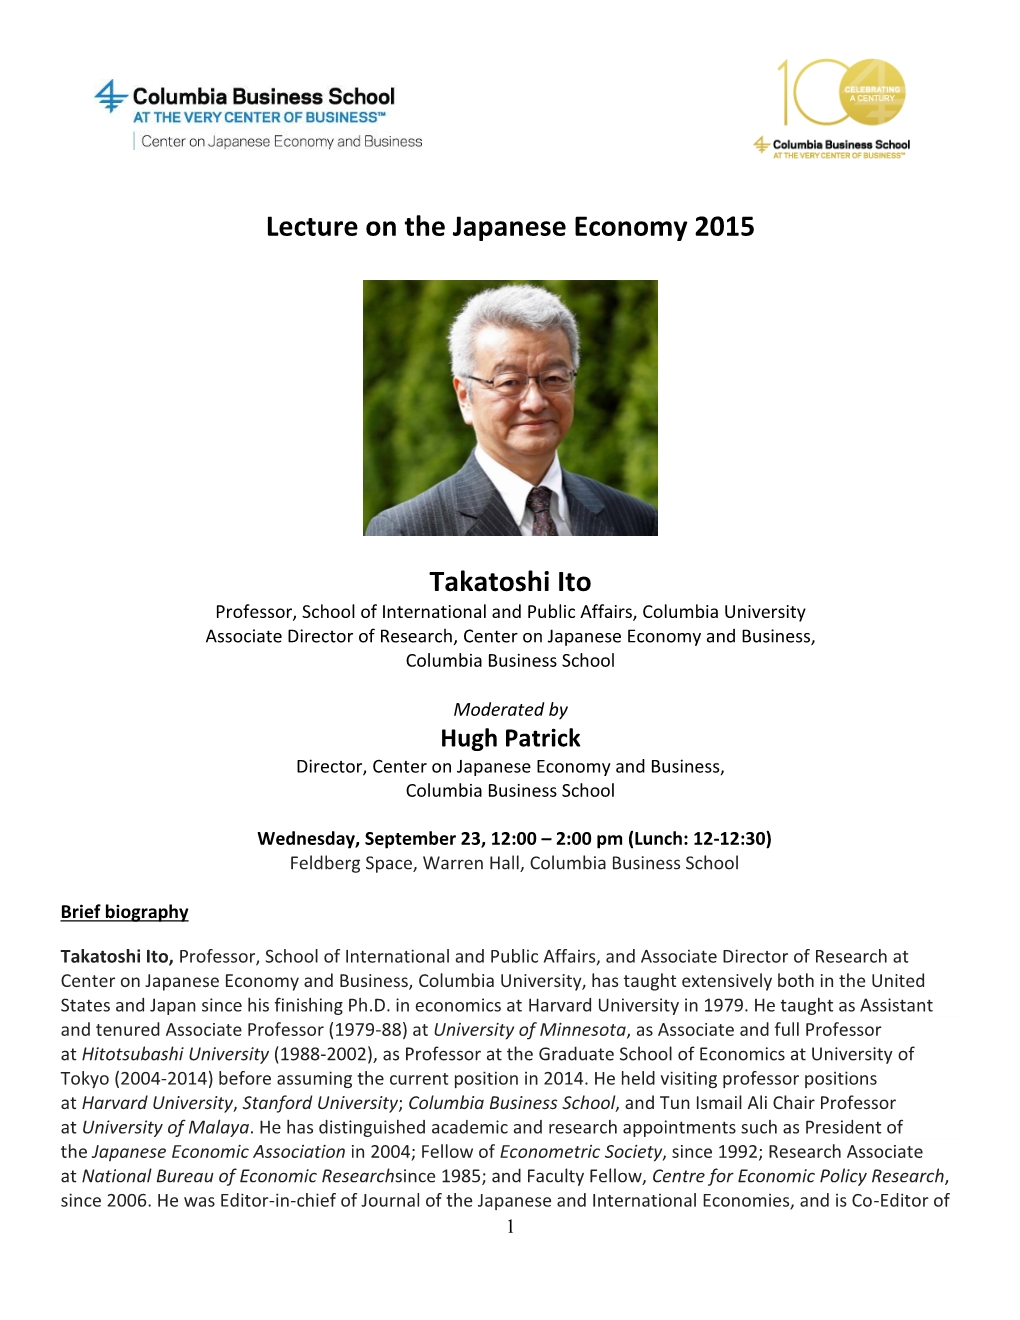 Takatoshi Ito Is Professor at the Graduate School of Economics, The